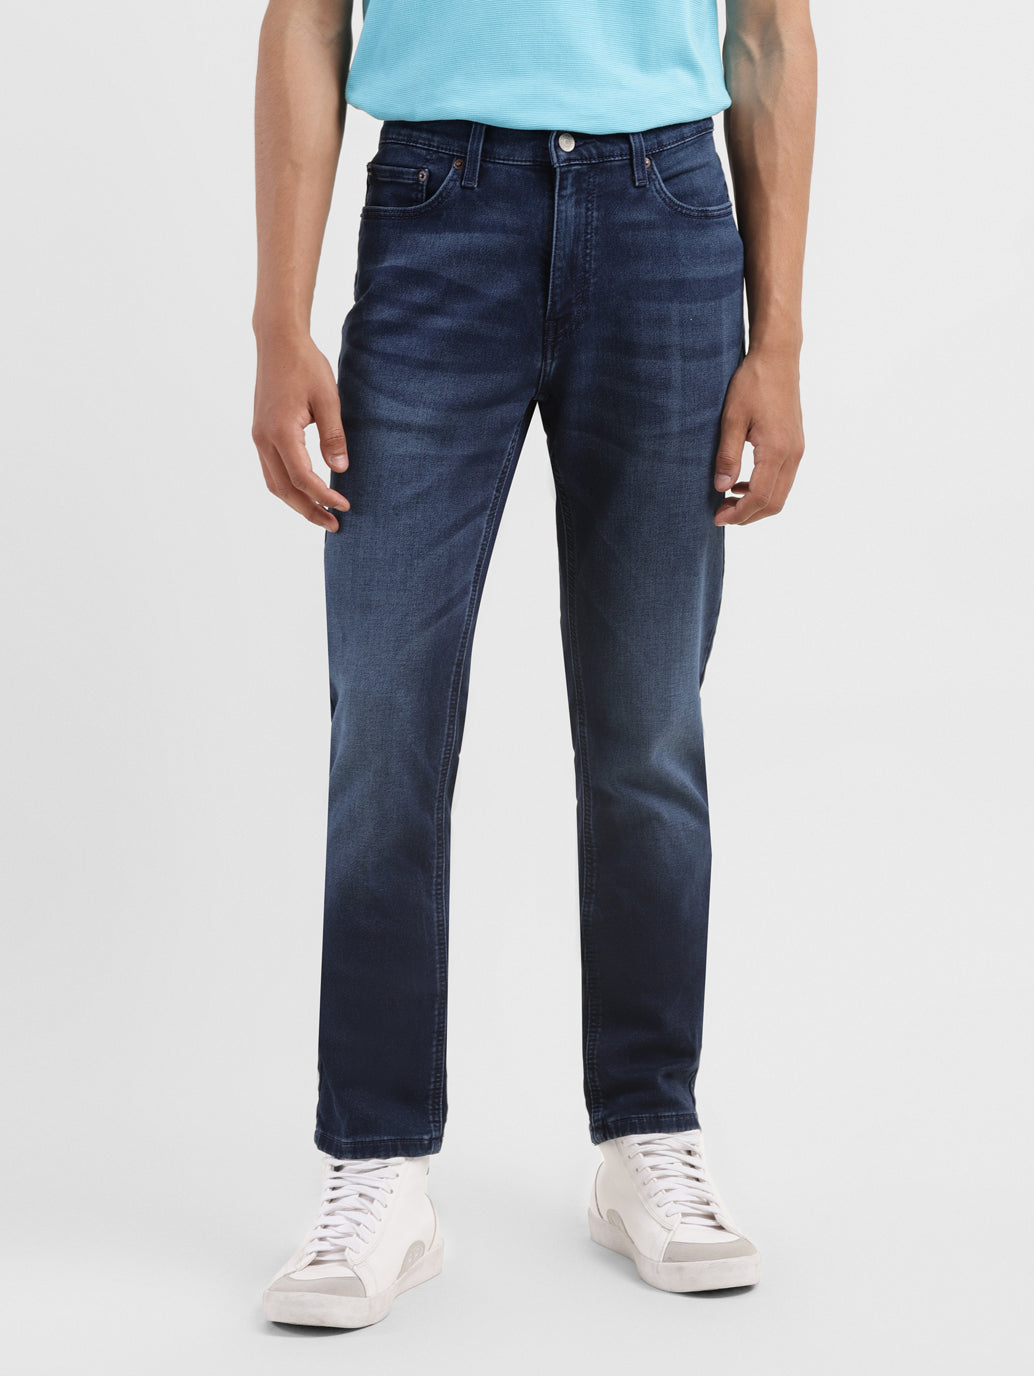 Men's 511 Blue Slim Fit Jeans